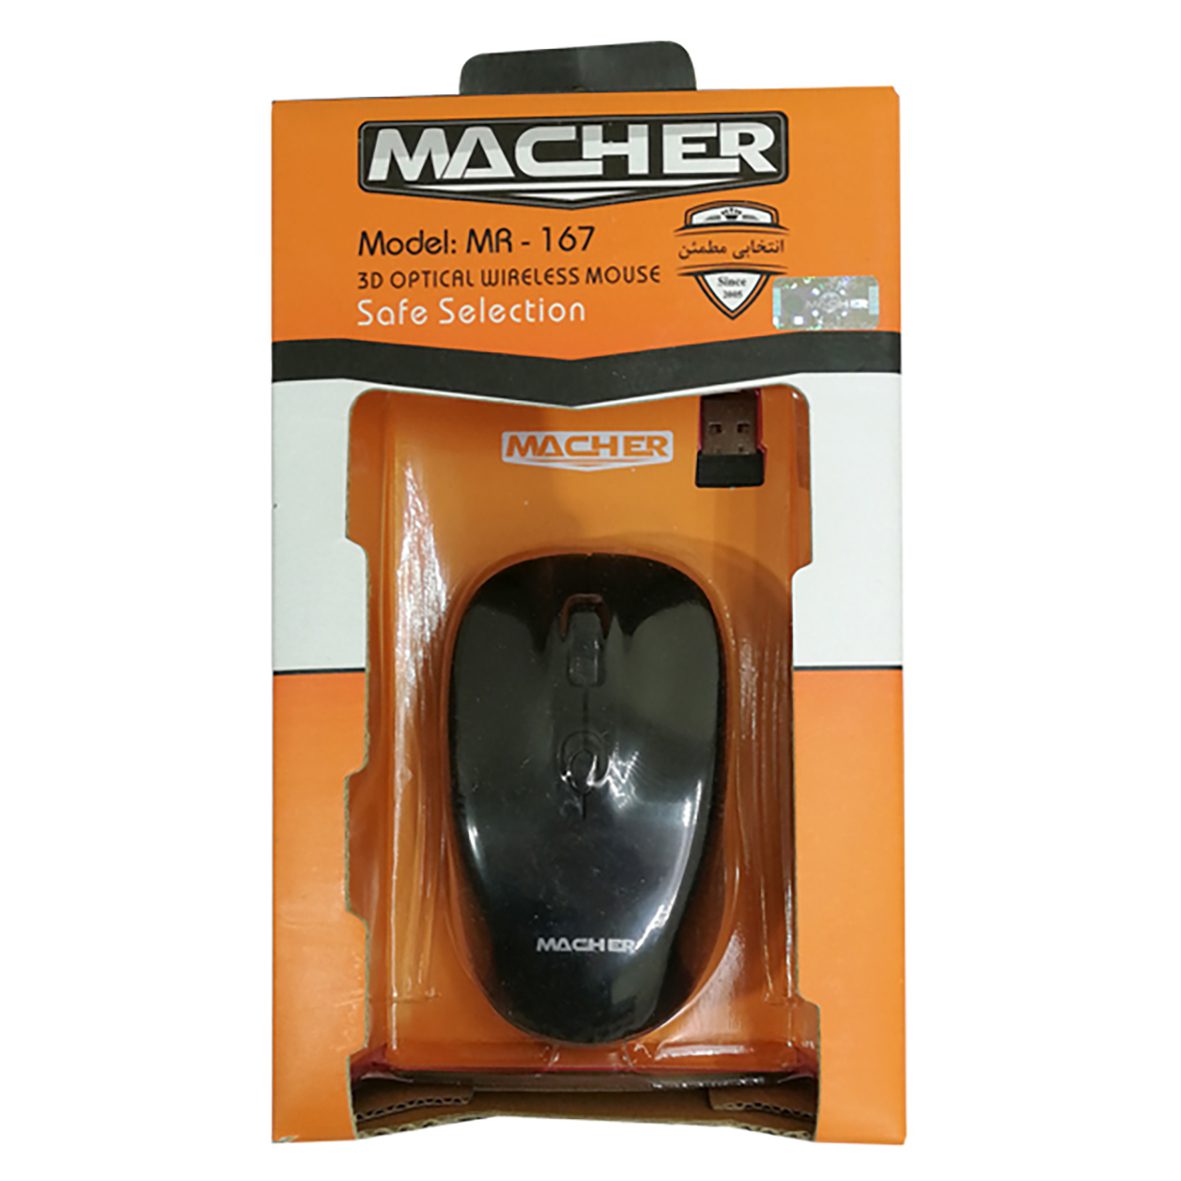 ماوس بی سیم مچر مدل MACHER MR-167 ا Macher MR-167 Wireless Mouse کد 5775 -سیکاس کالا